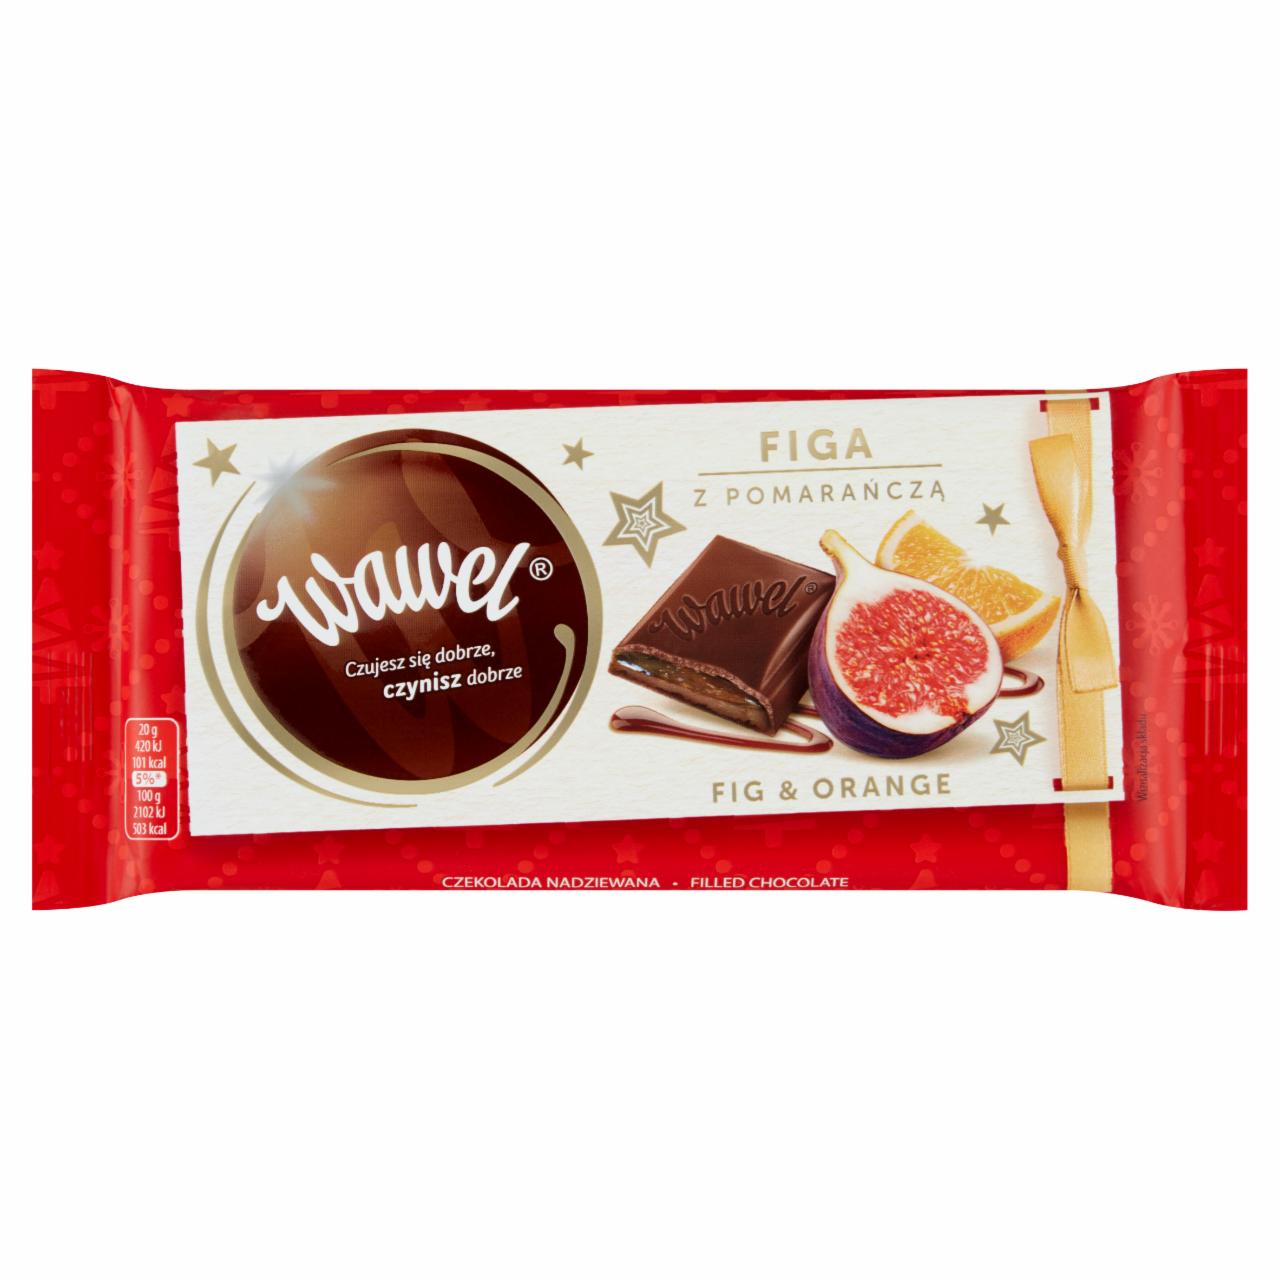 Photo - Wawel Fig & Orange Filled Chocolate 100 g